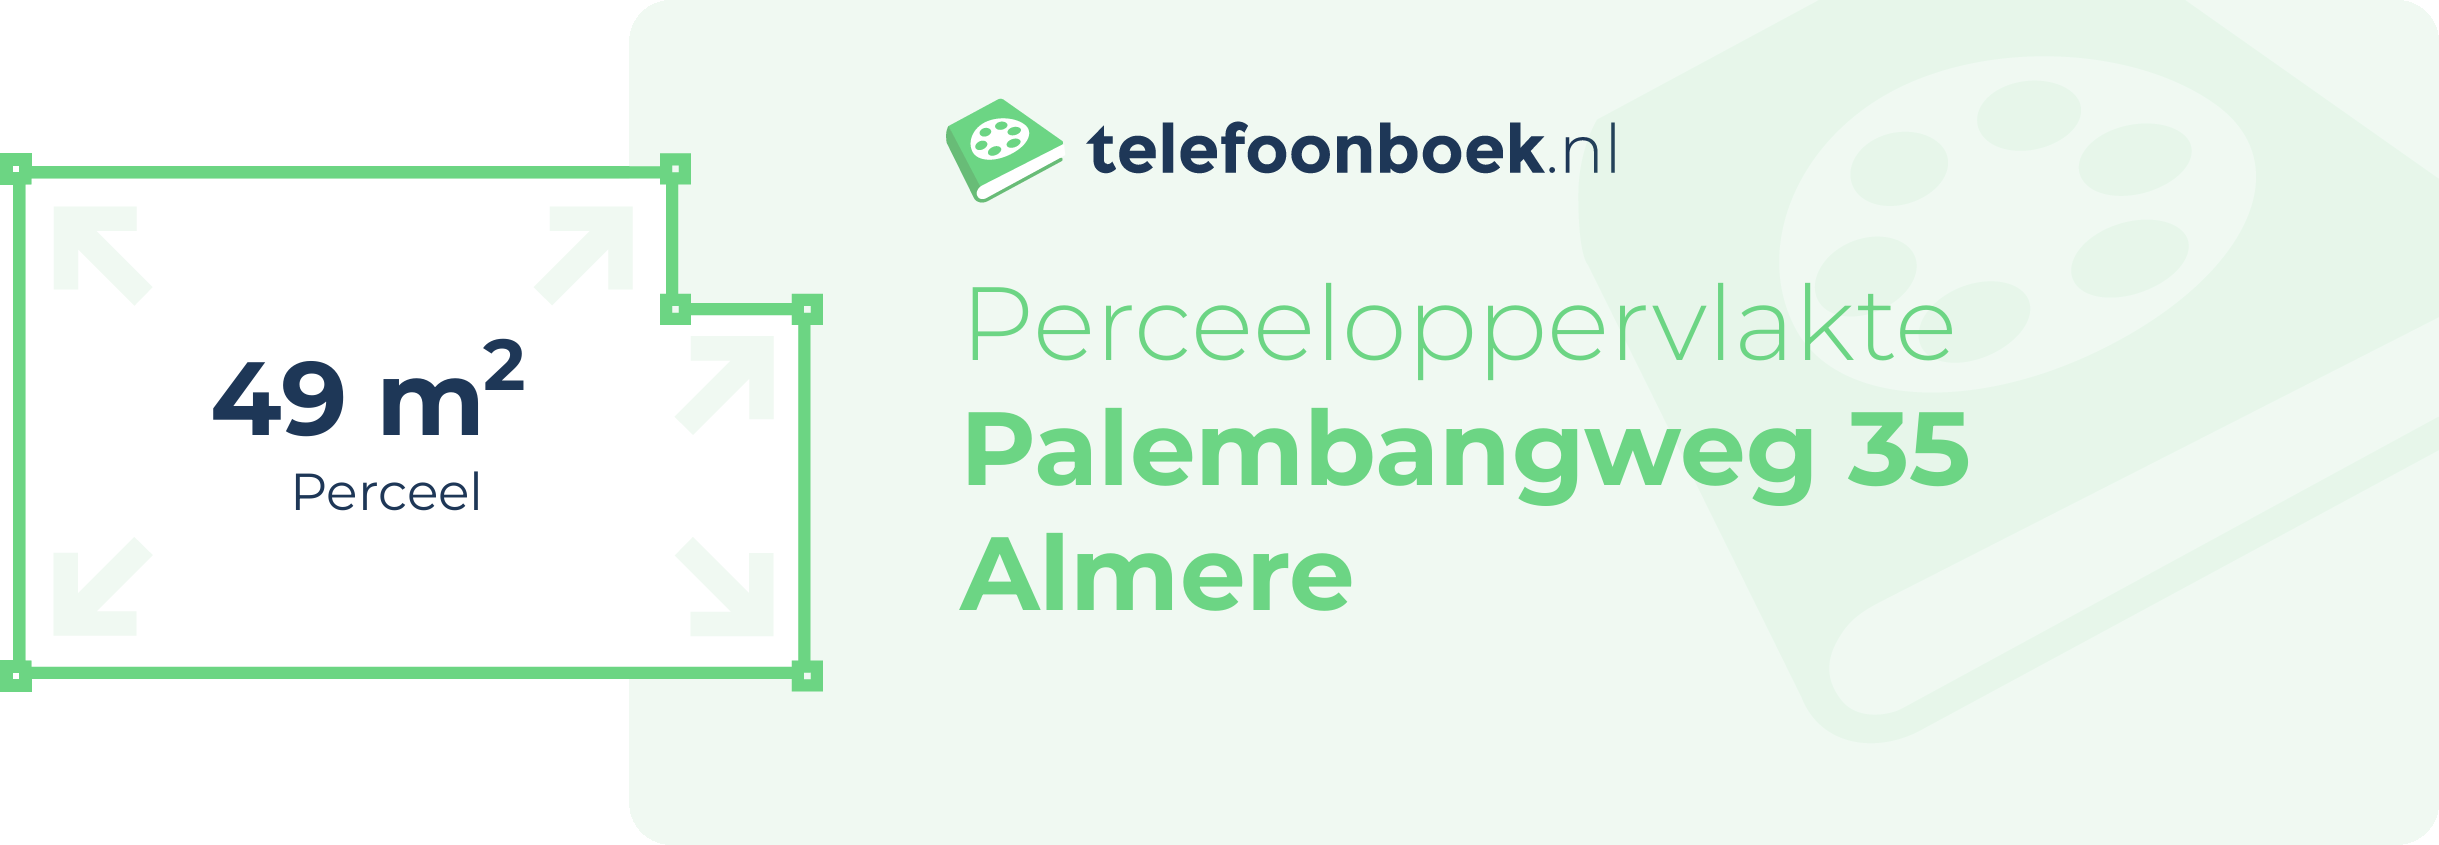 Perceeloppervlakte Palembangweg 35 Almere